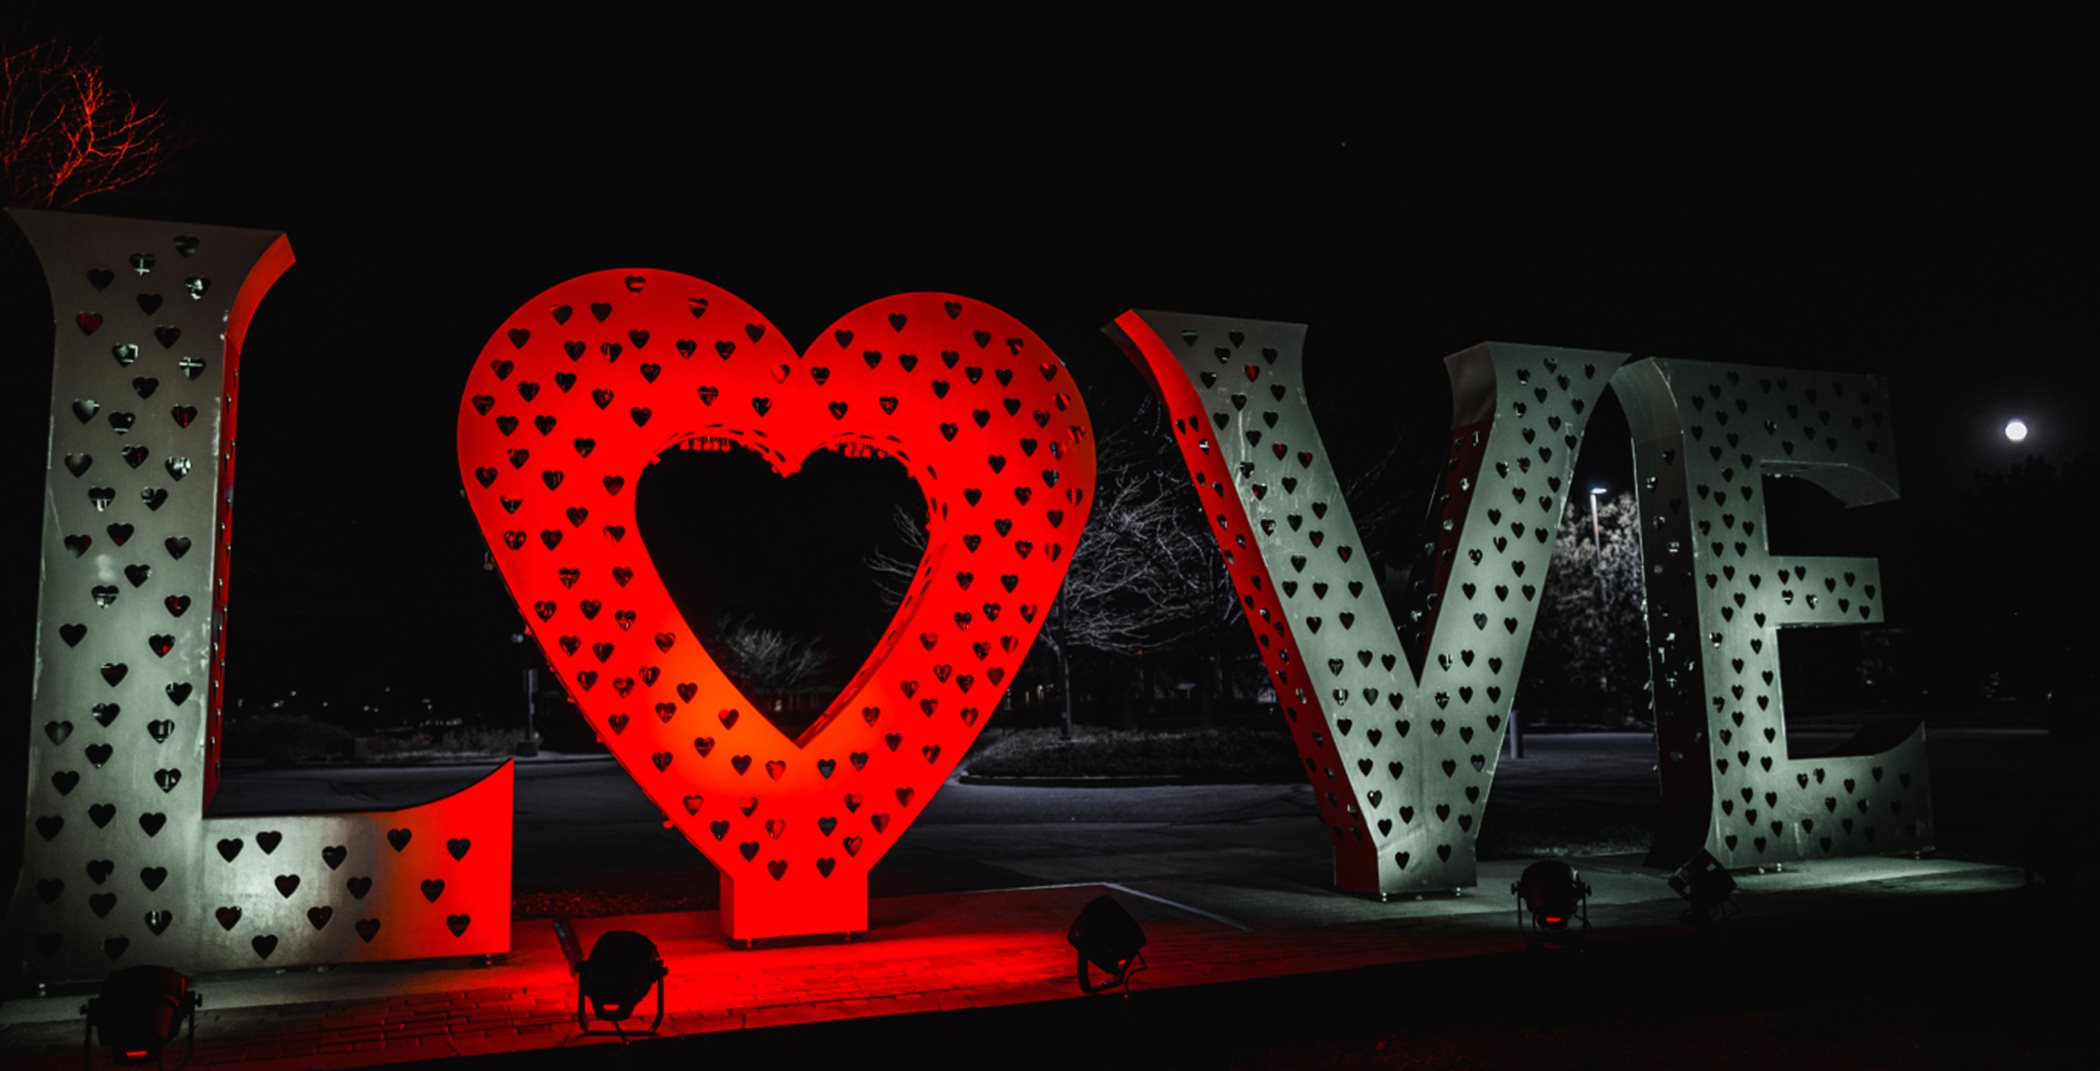 Loveland Visitor’s Center sign lit up at night